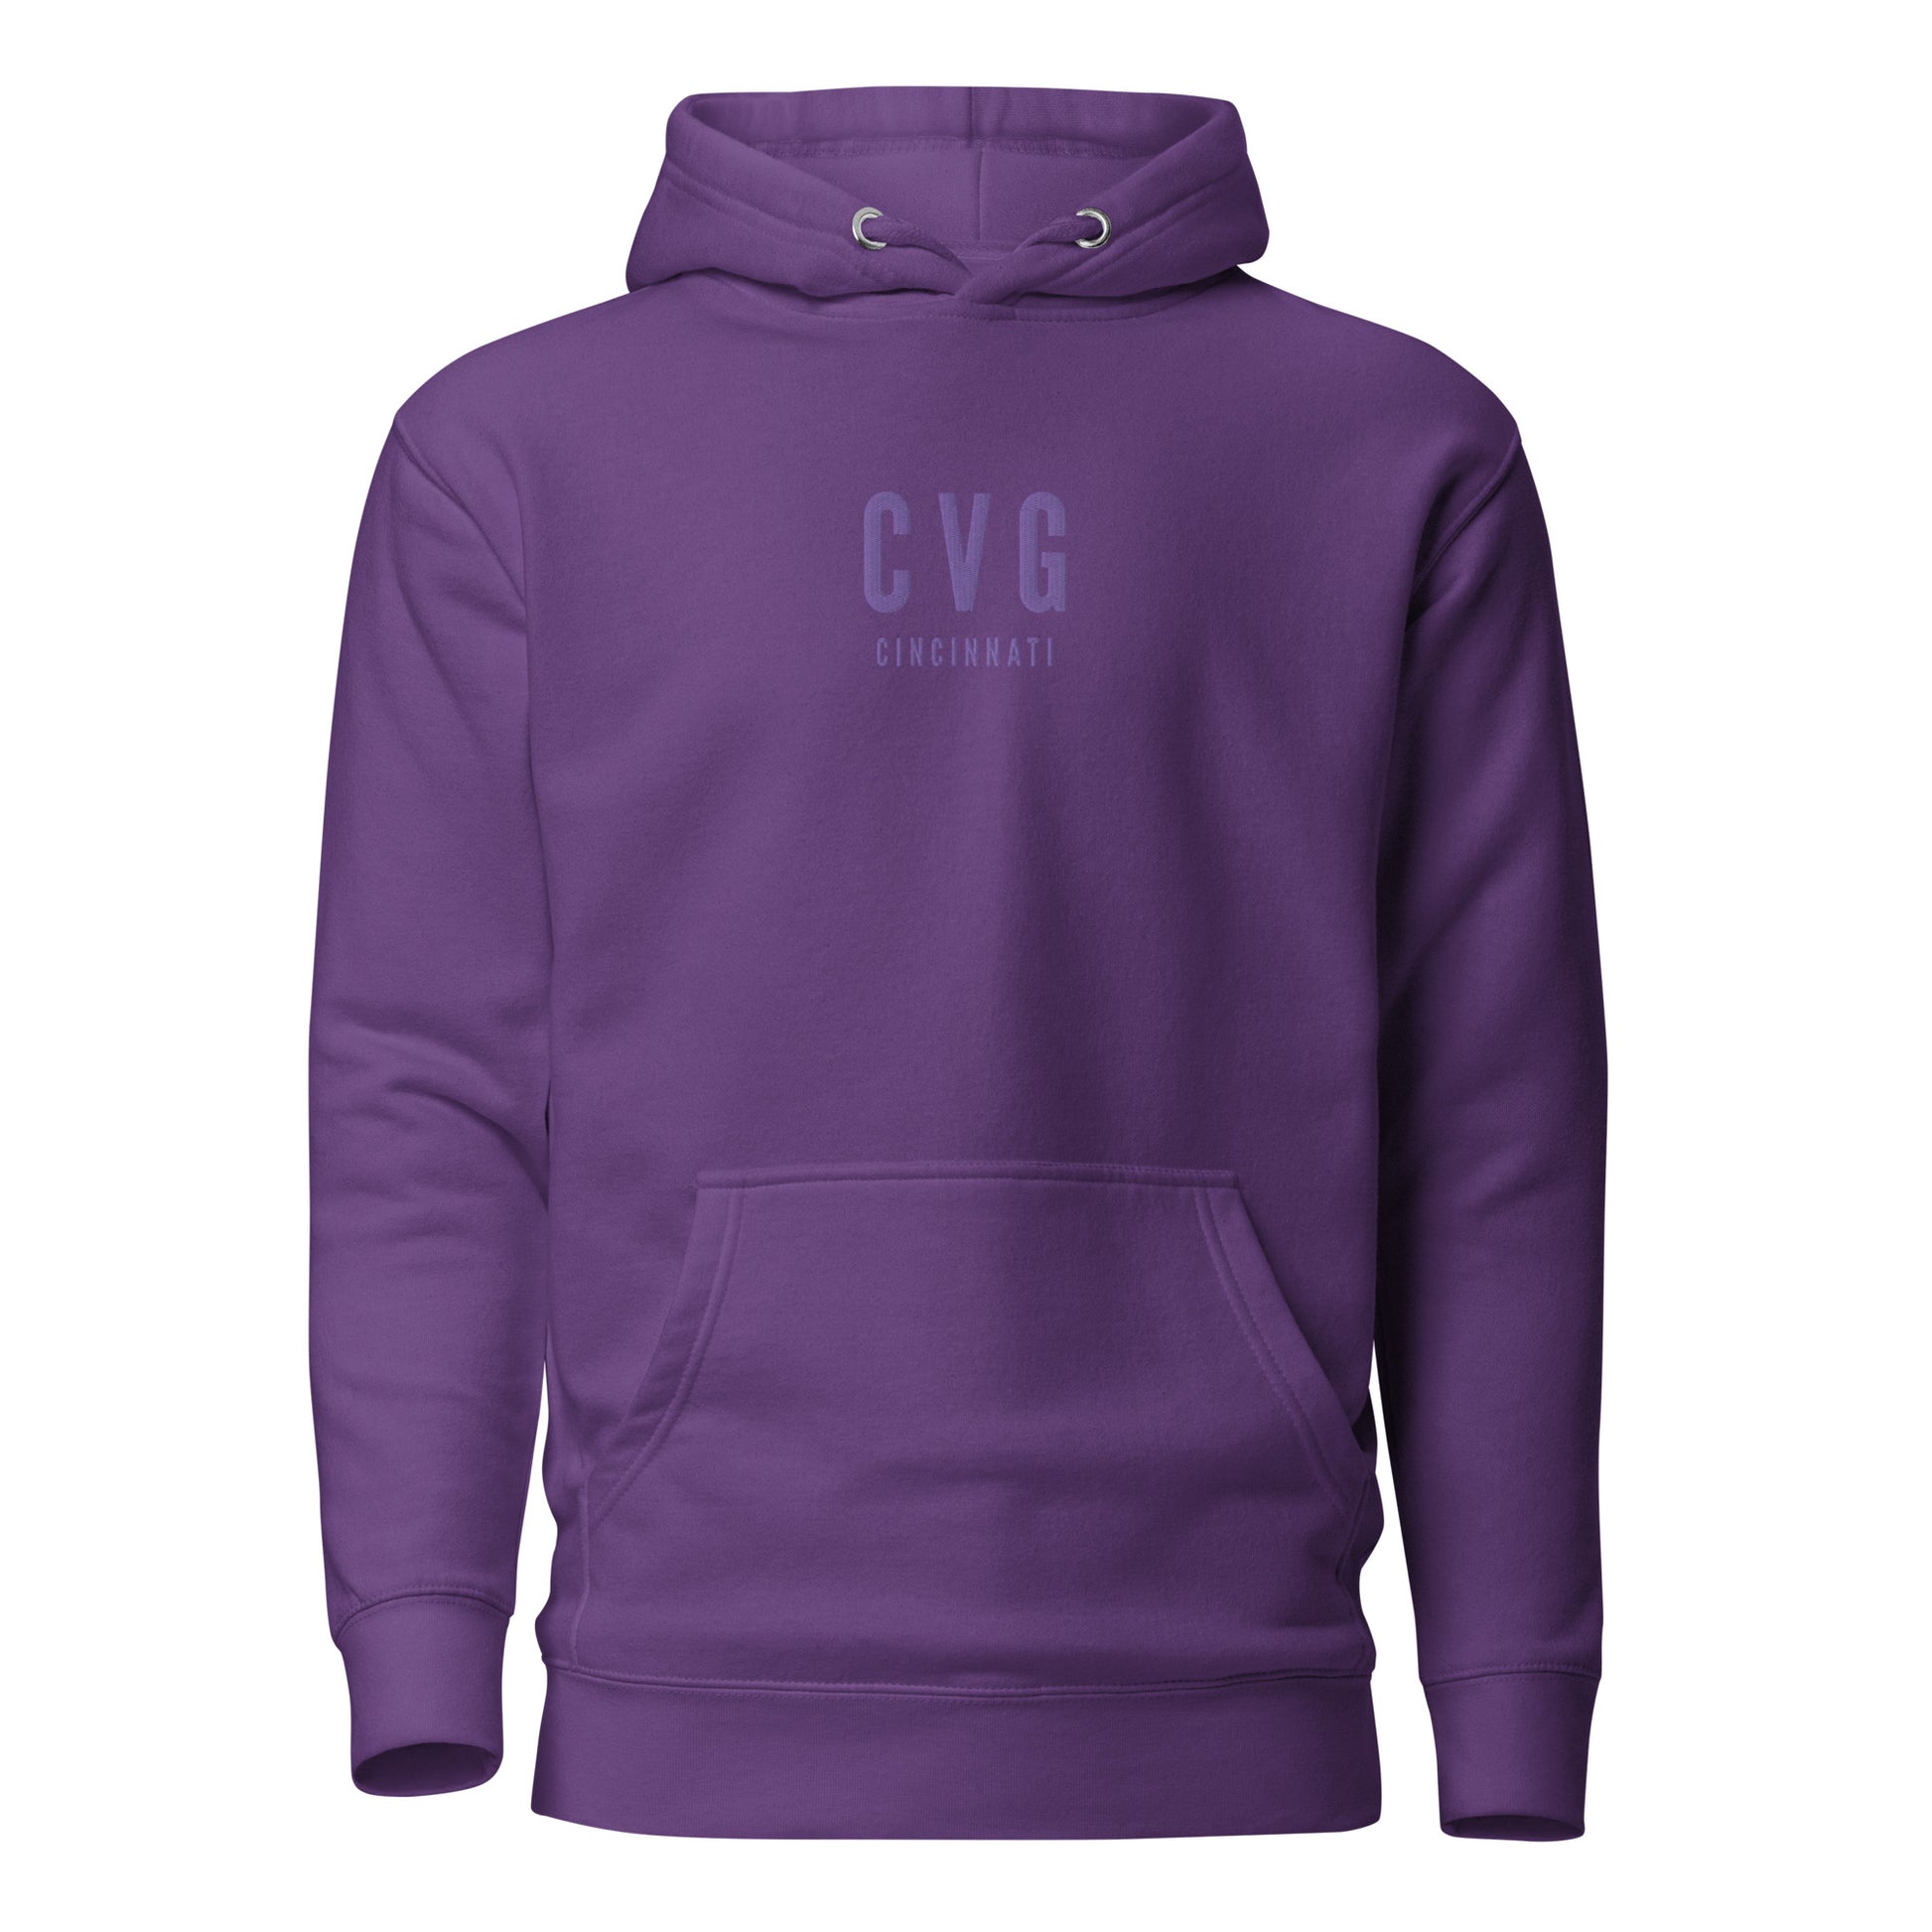 City Premium Hoodie - Monochrome • CVG Cincinnati • YHM Designs - Image 06